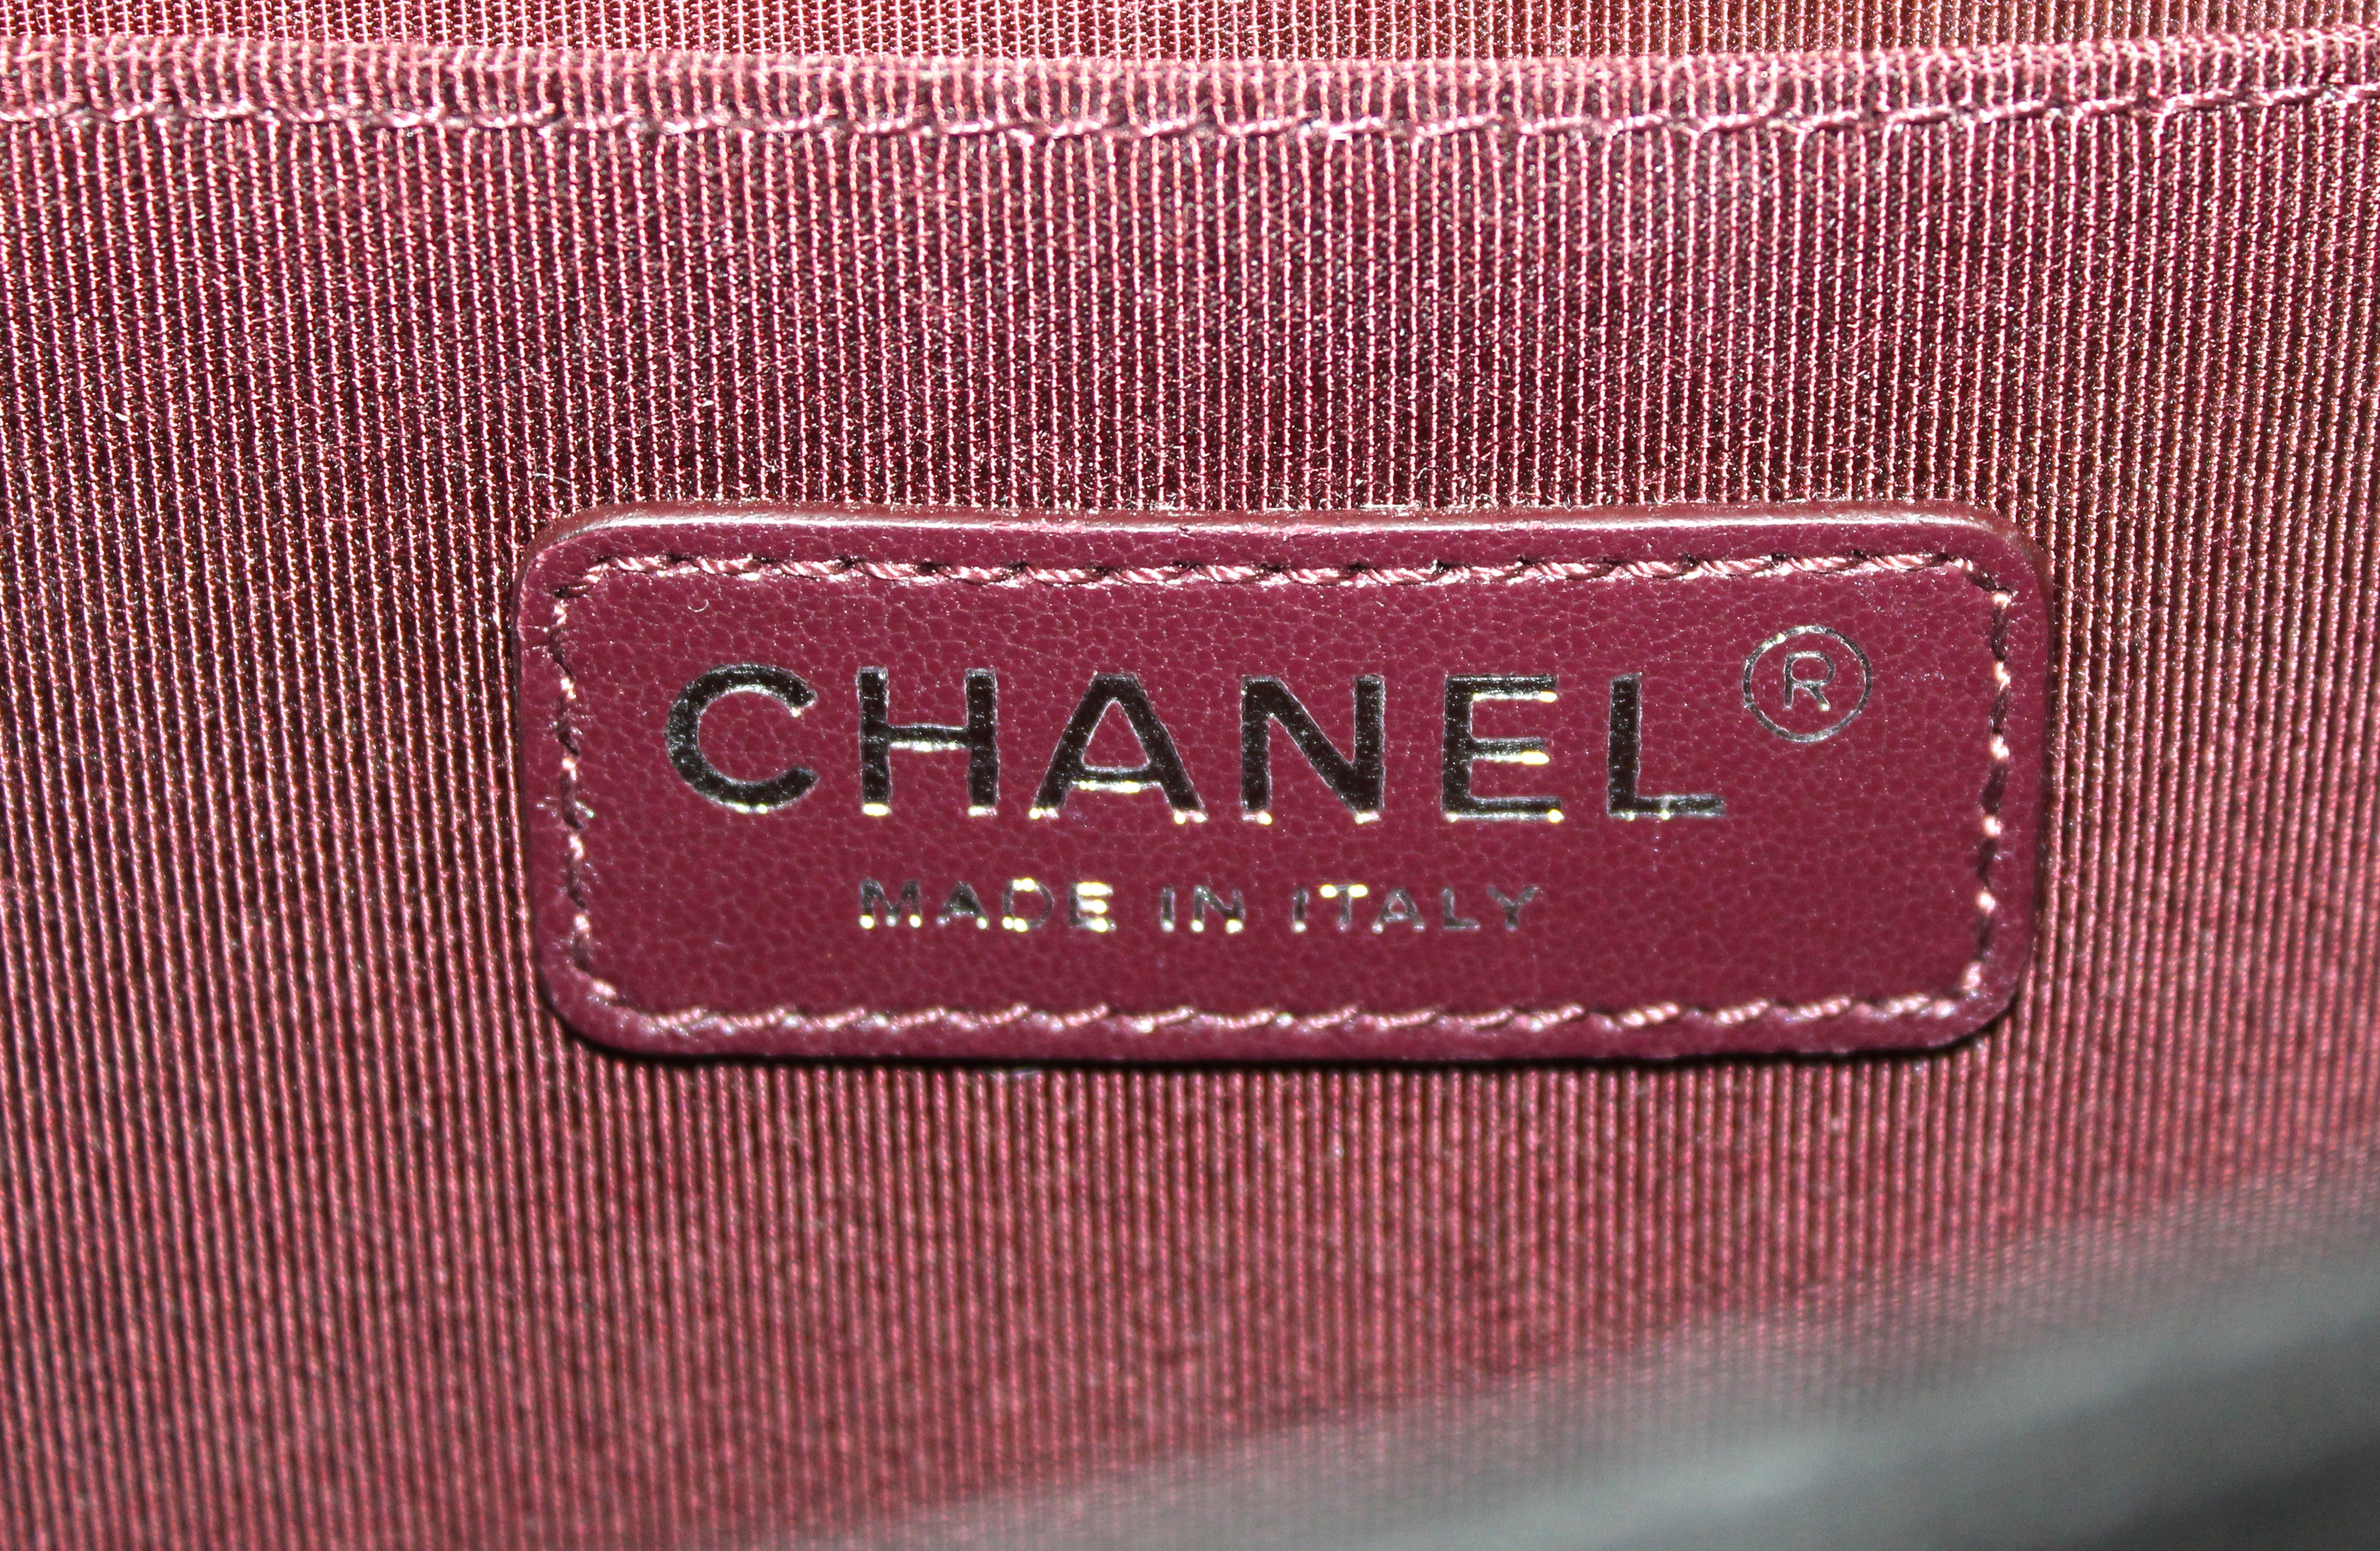 Authentic Chanel Studded Boy Flap Shoulder Bag